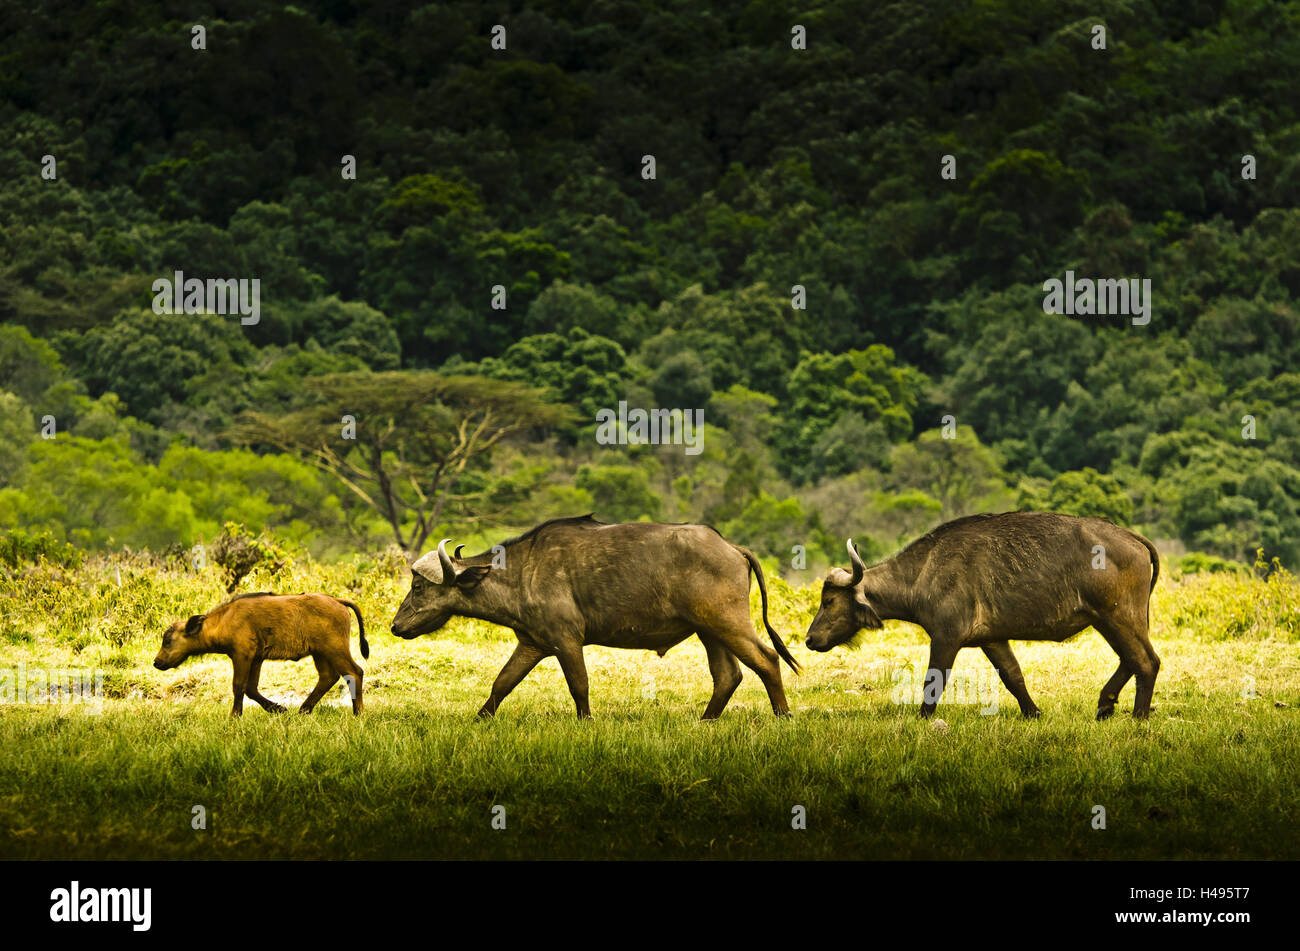 Africa, Tanzania, East Africa, Mt. Meru, Arusha National Park, buffalos, Stock Photo